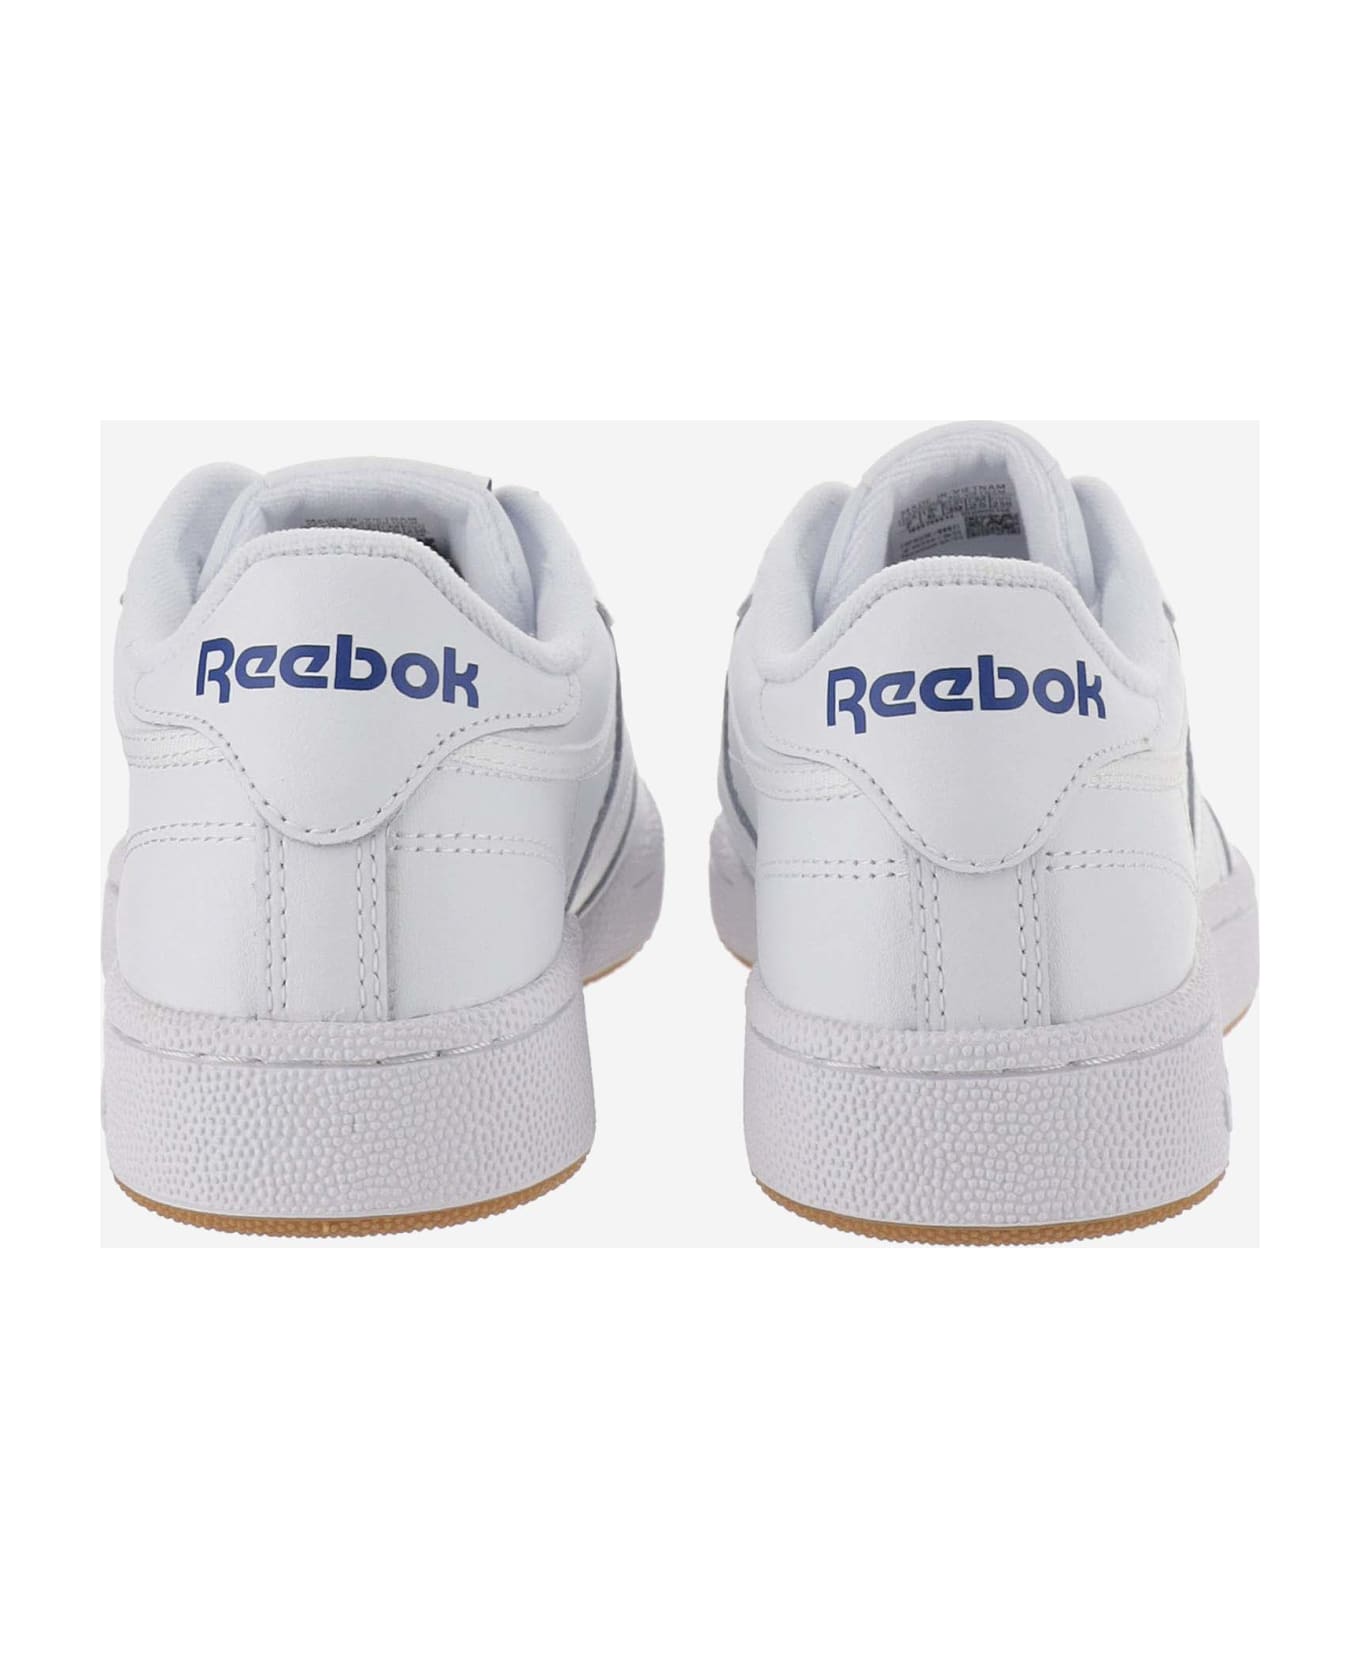 Reebok Club C 85 Leather Sneakers - White スニーカー